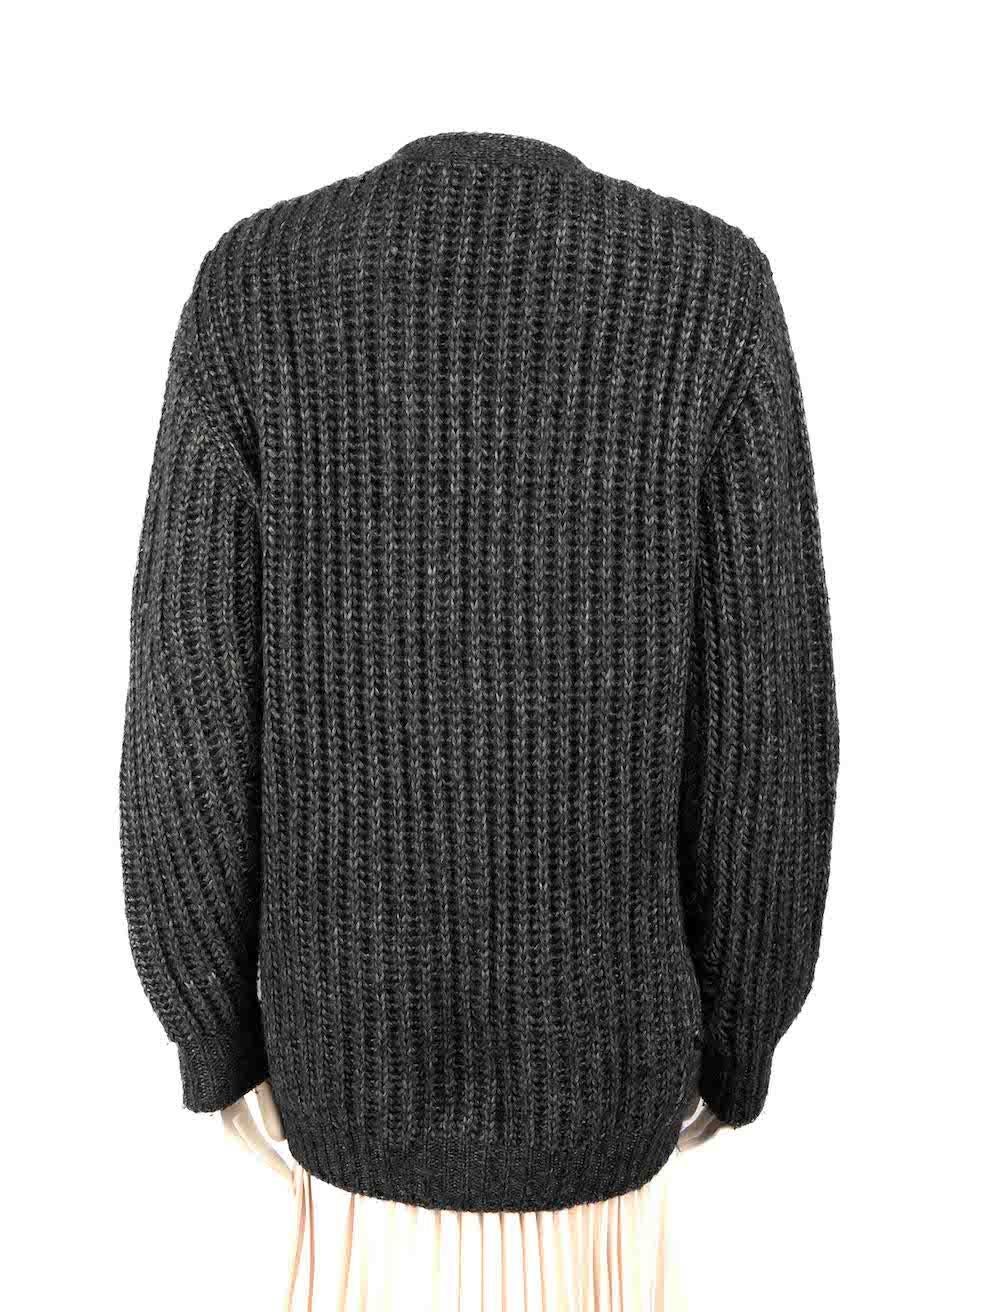 Saint Laurent Grey Distressed Knit Cardigan Size M For Sale 4